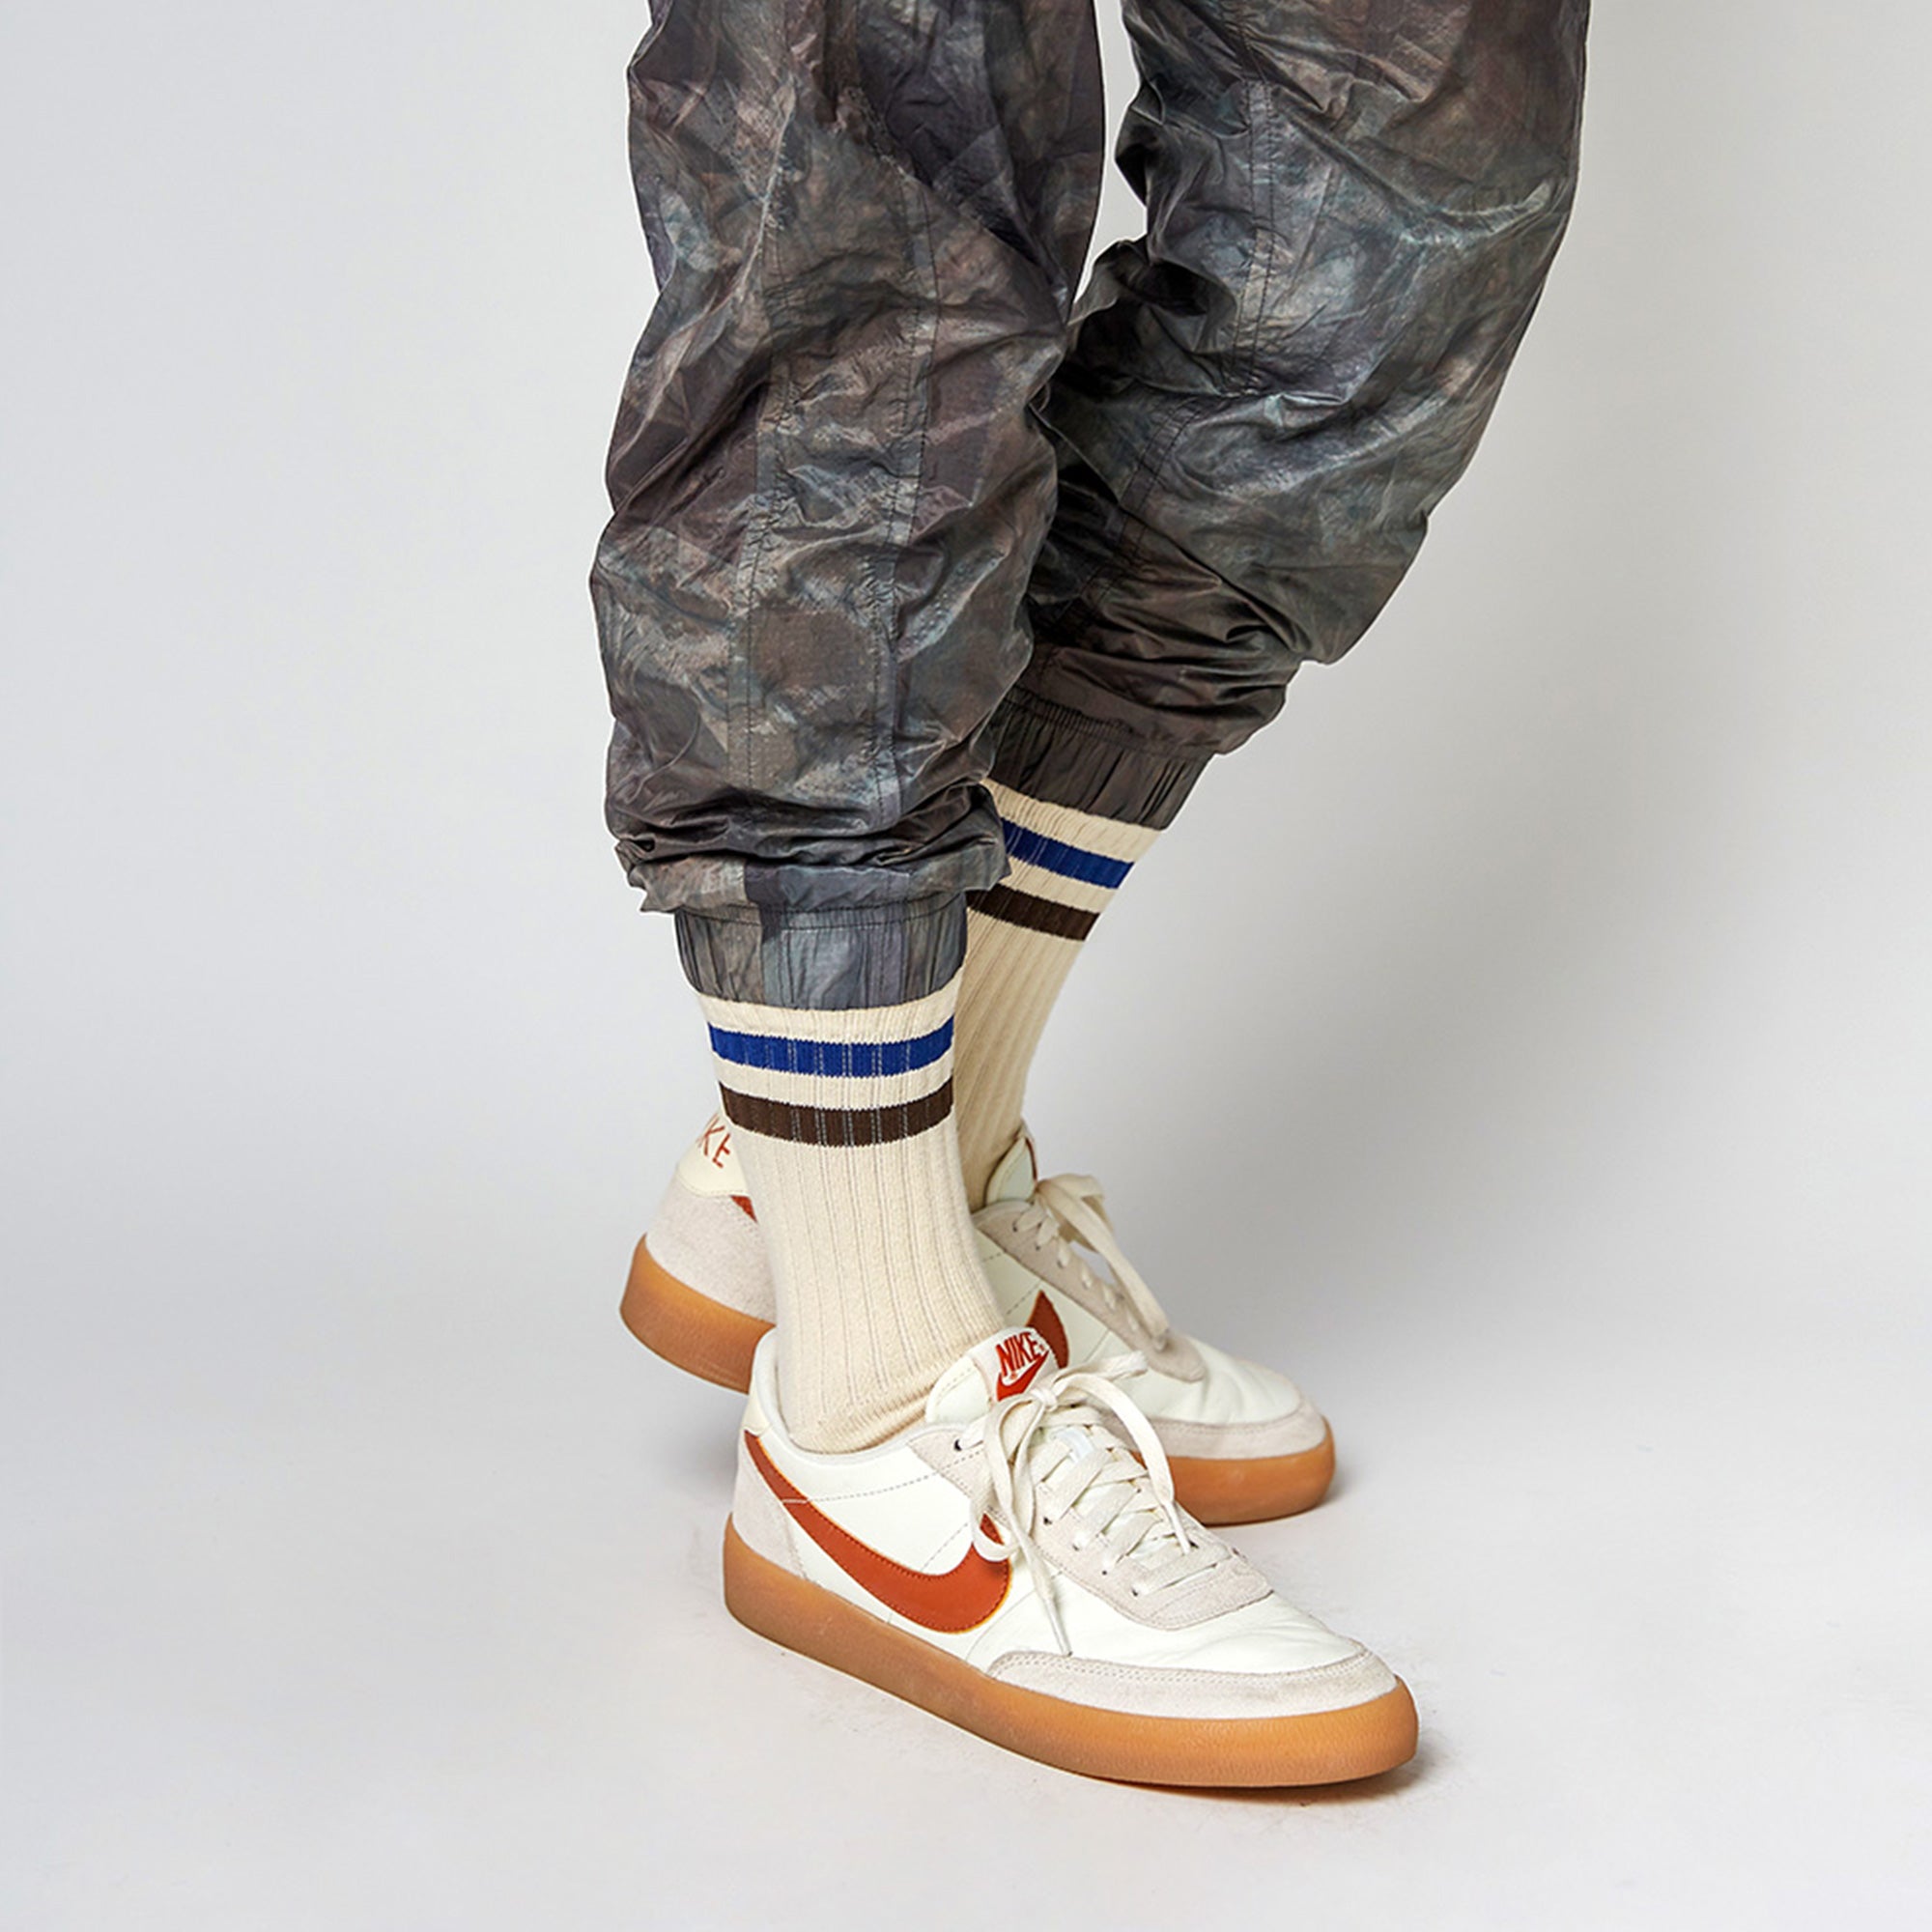 Men&#39;s Vintage Stripe Socks - Navy, Brown, &amp; Cream